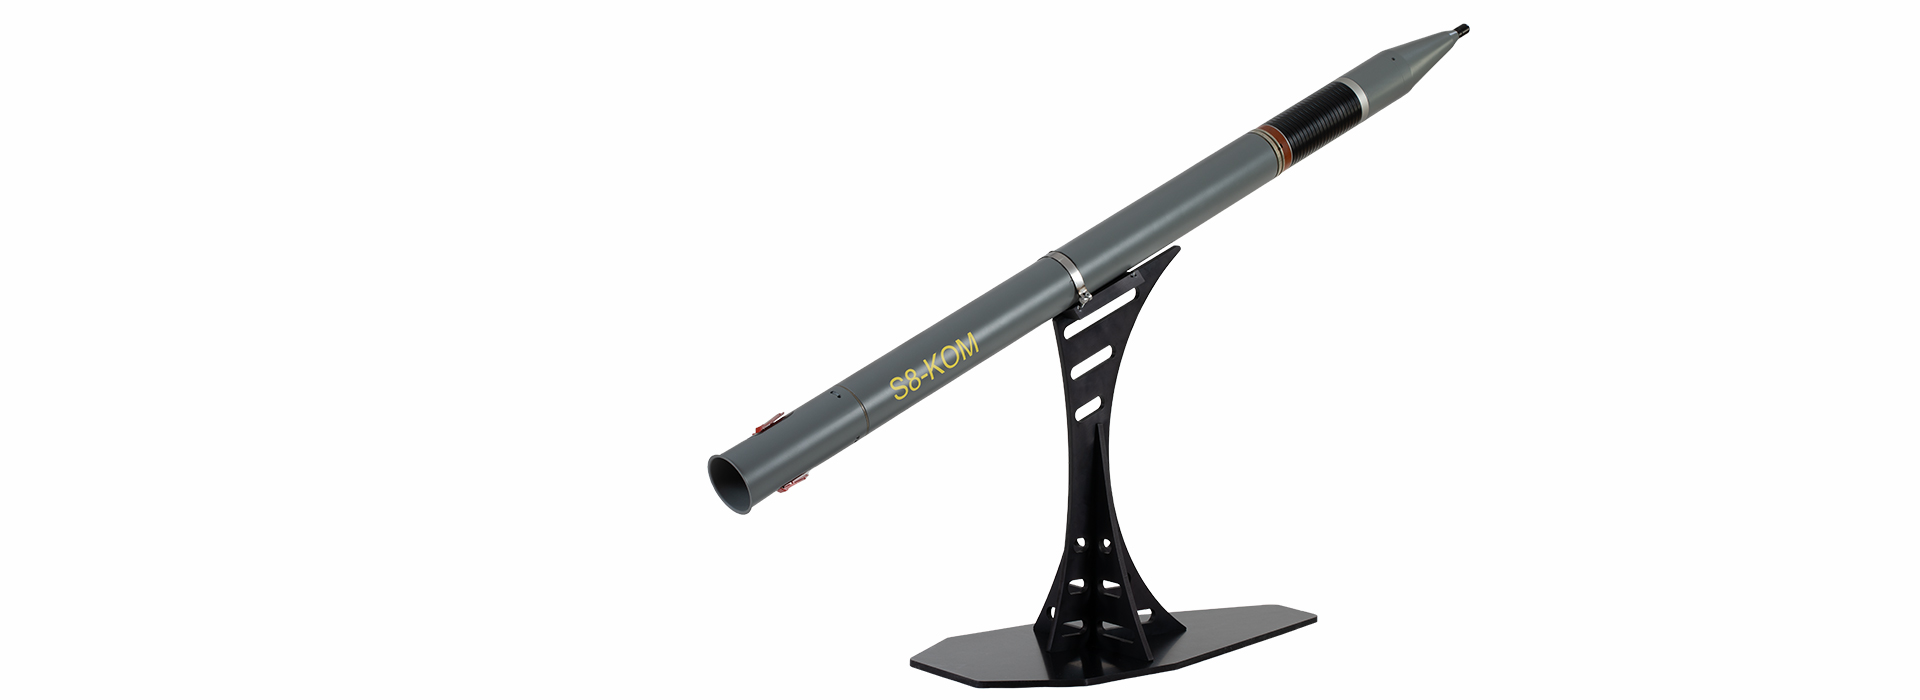 EDePro | Air to surface rocket S8-KOM